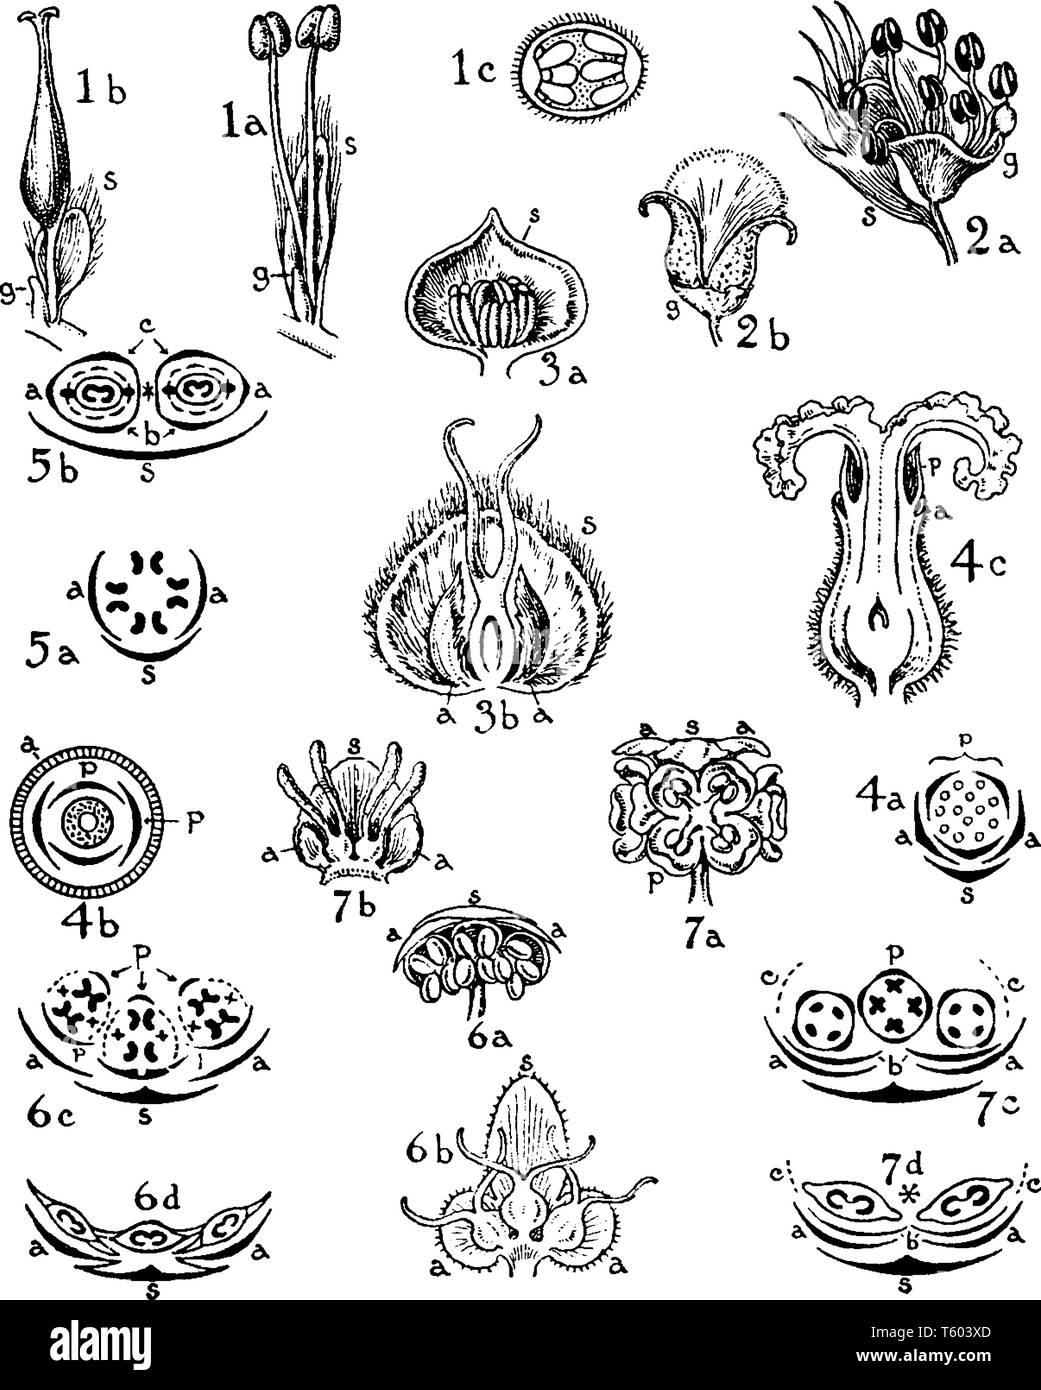 The plant flowers are arranged in orders: Salicaceae, Myricaceae, Juglandaceae, and Betulaceae, vintage line drawing or engraving illustration. Stock Vector